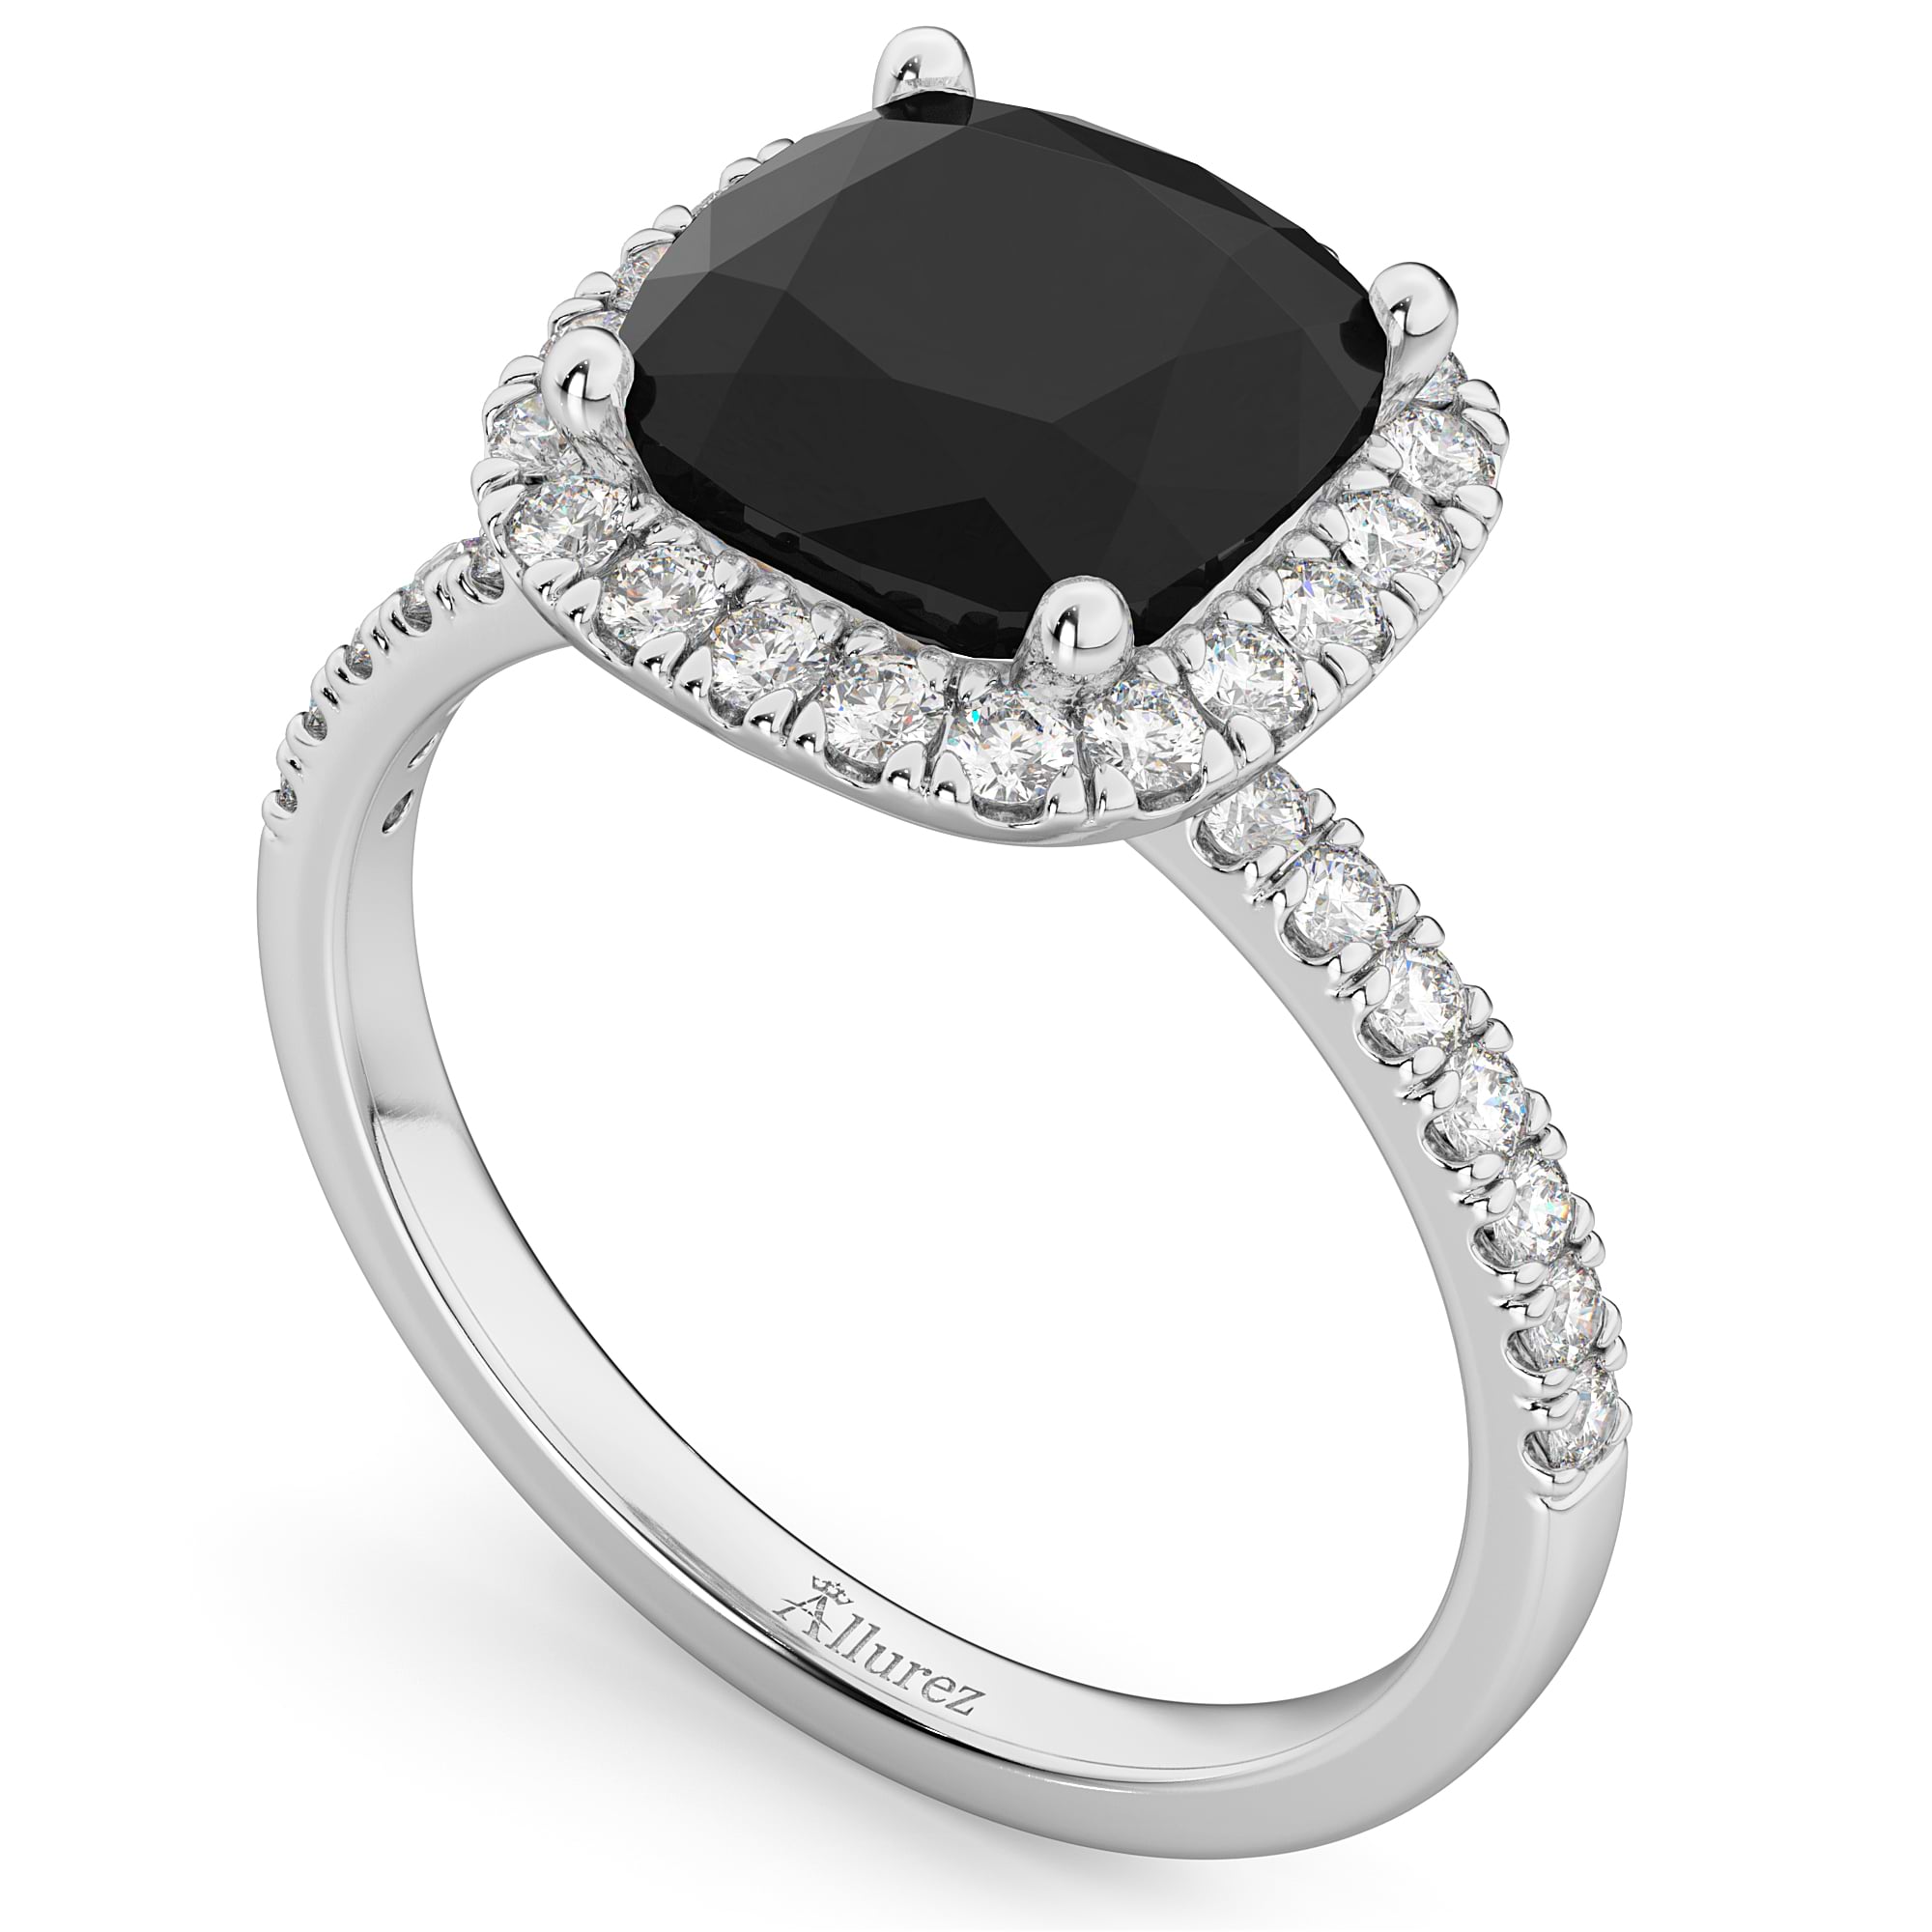 Cushion Cut Black Diamond Engagement Ring 14k White Gold (2.55ct)